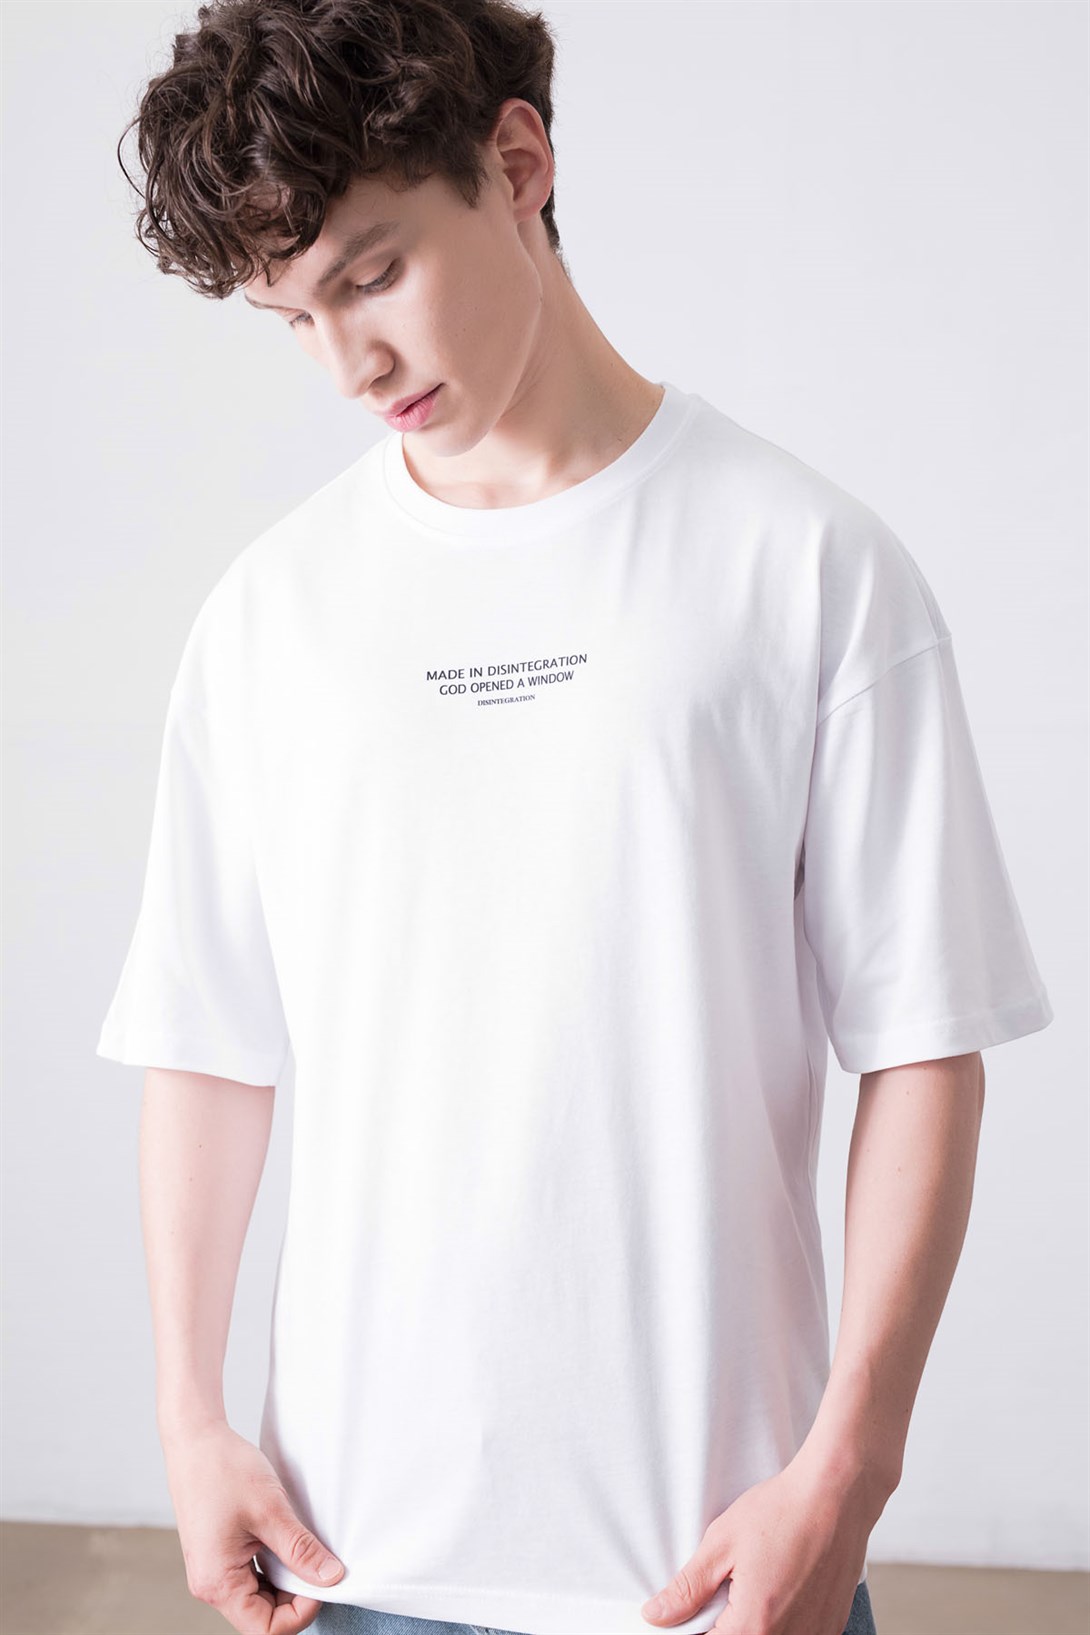 Trendiz Unisex Made in Disintegration Beyaz Tshirt